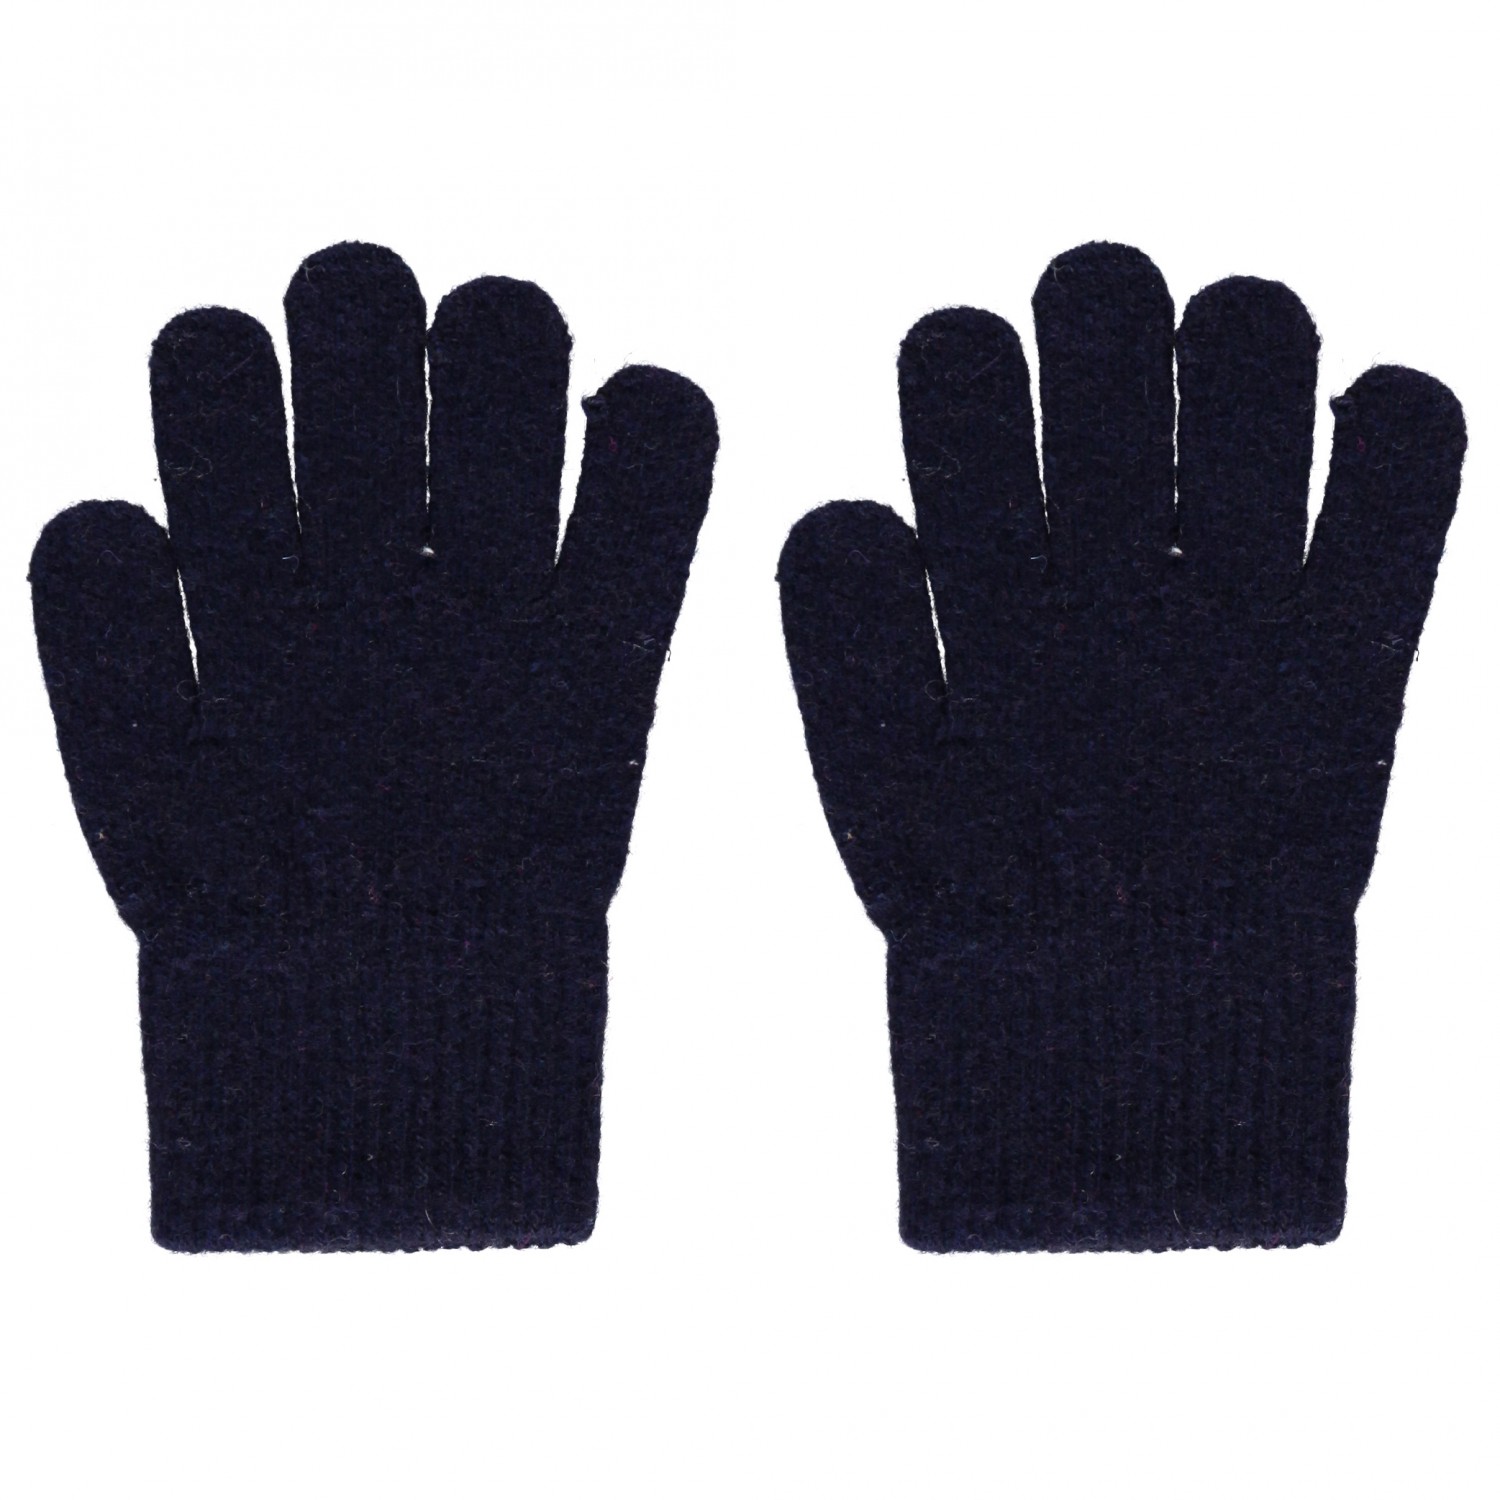 Wool Magic Gloves